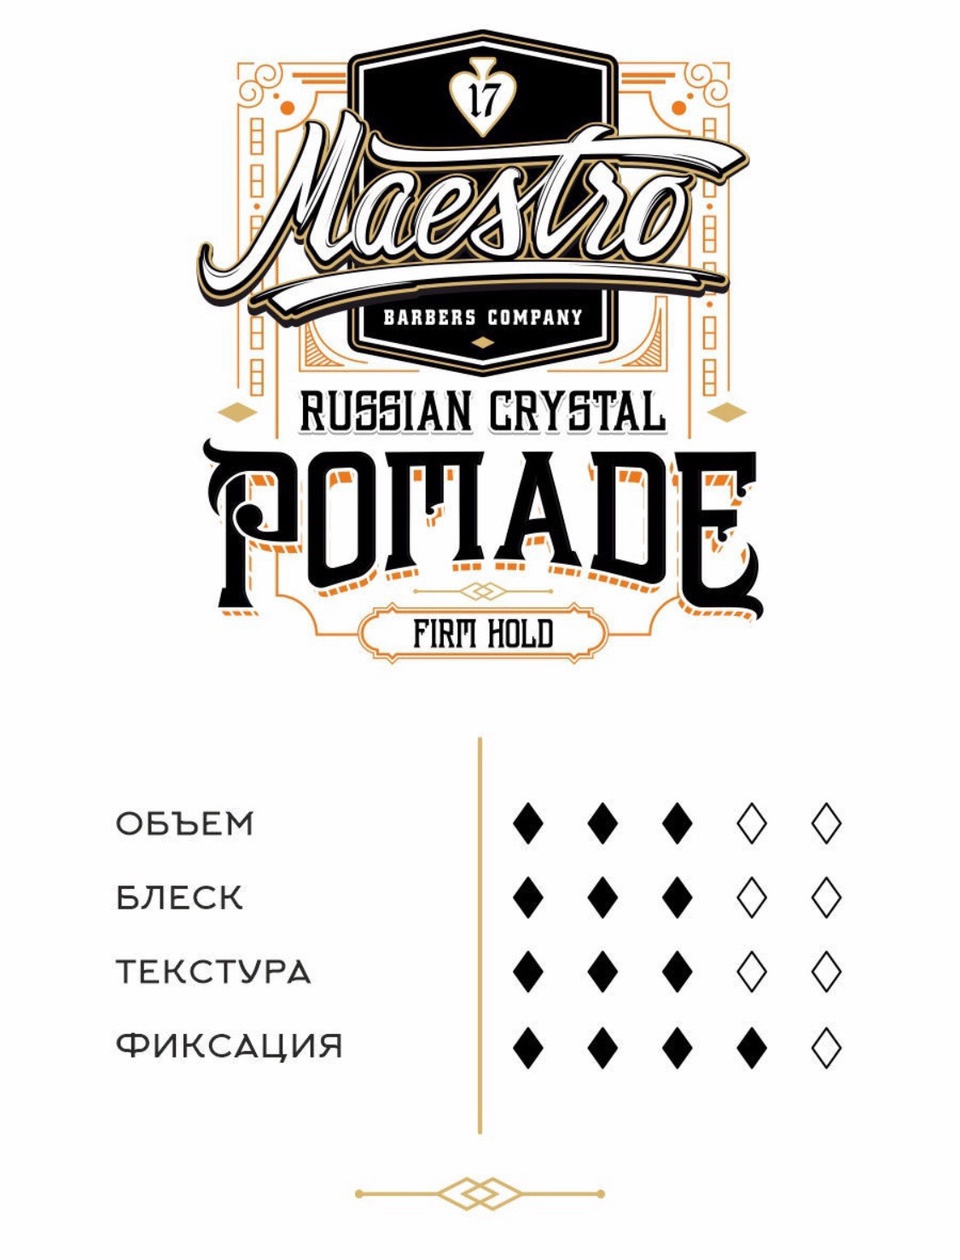 Maestro - Russian Crystal Pomade, 75г - 800 ₽, заказать онлайн.